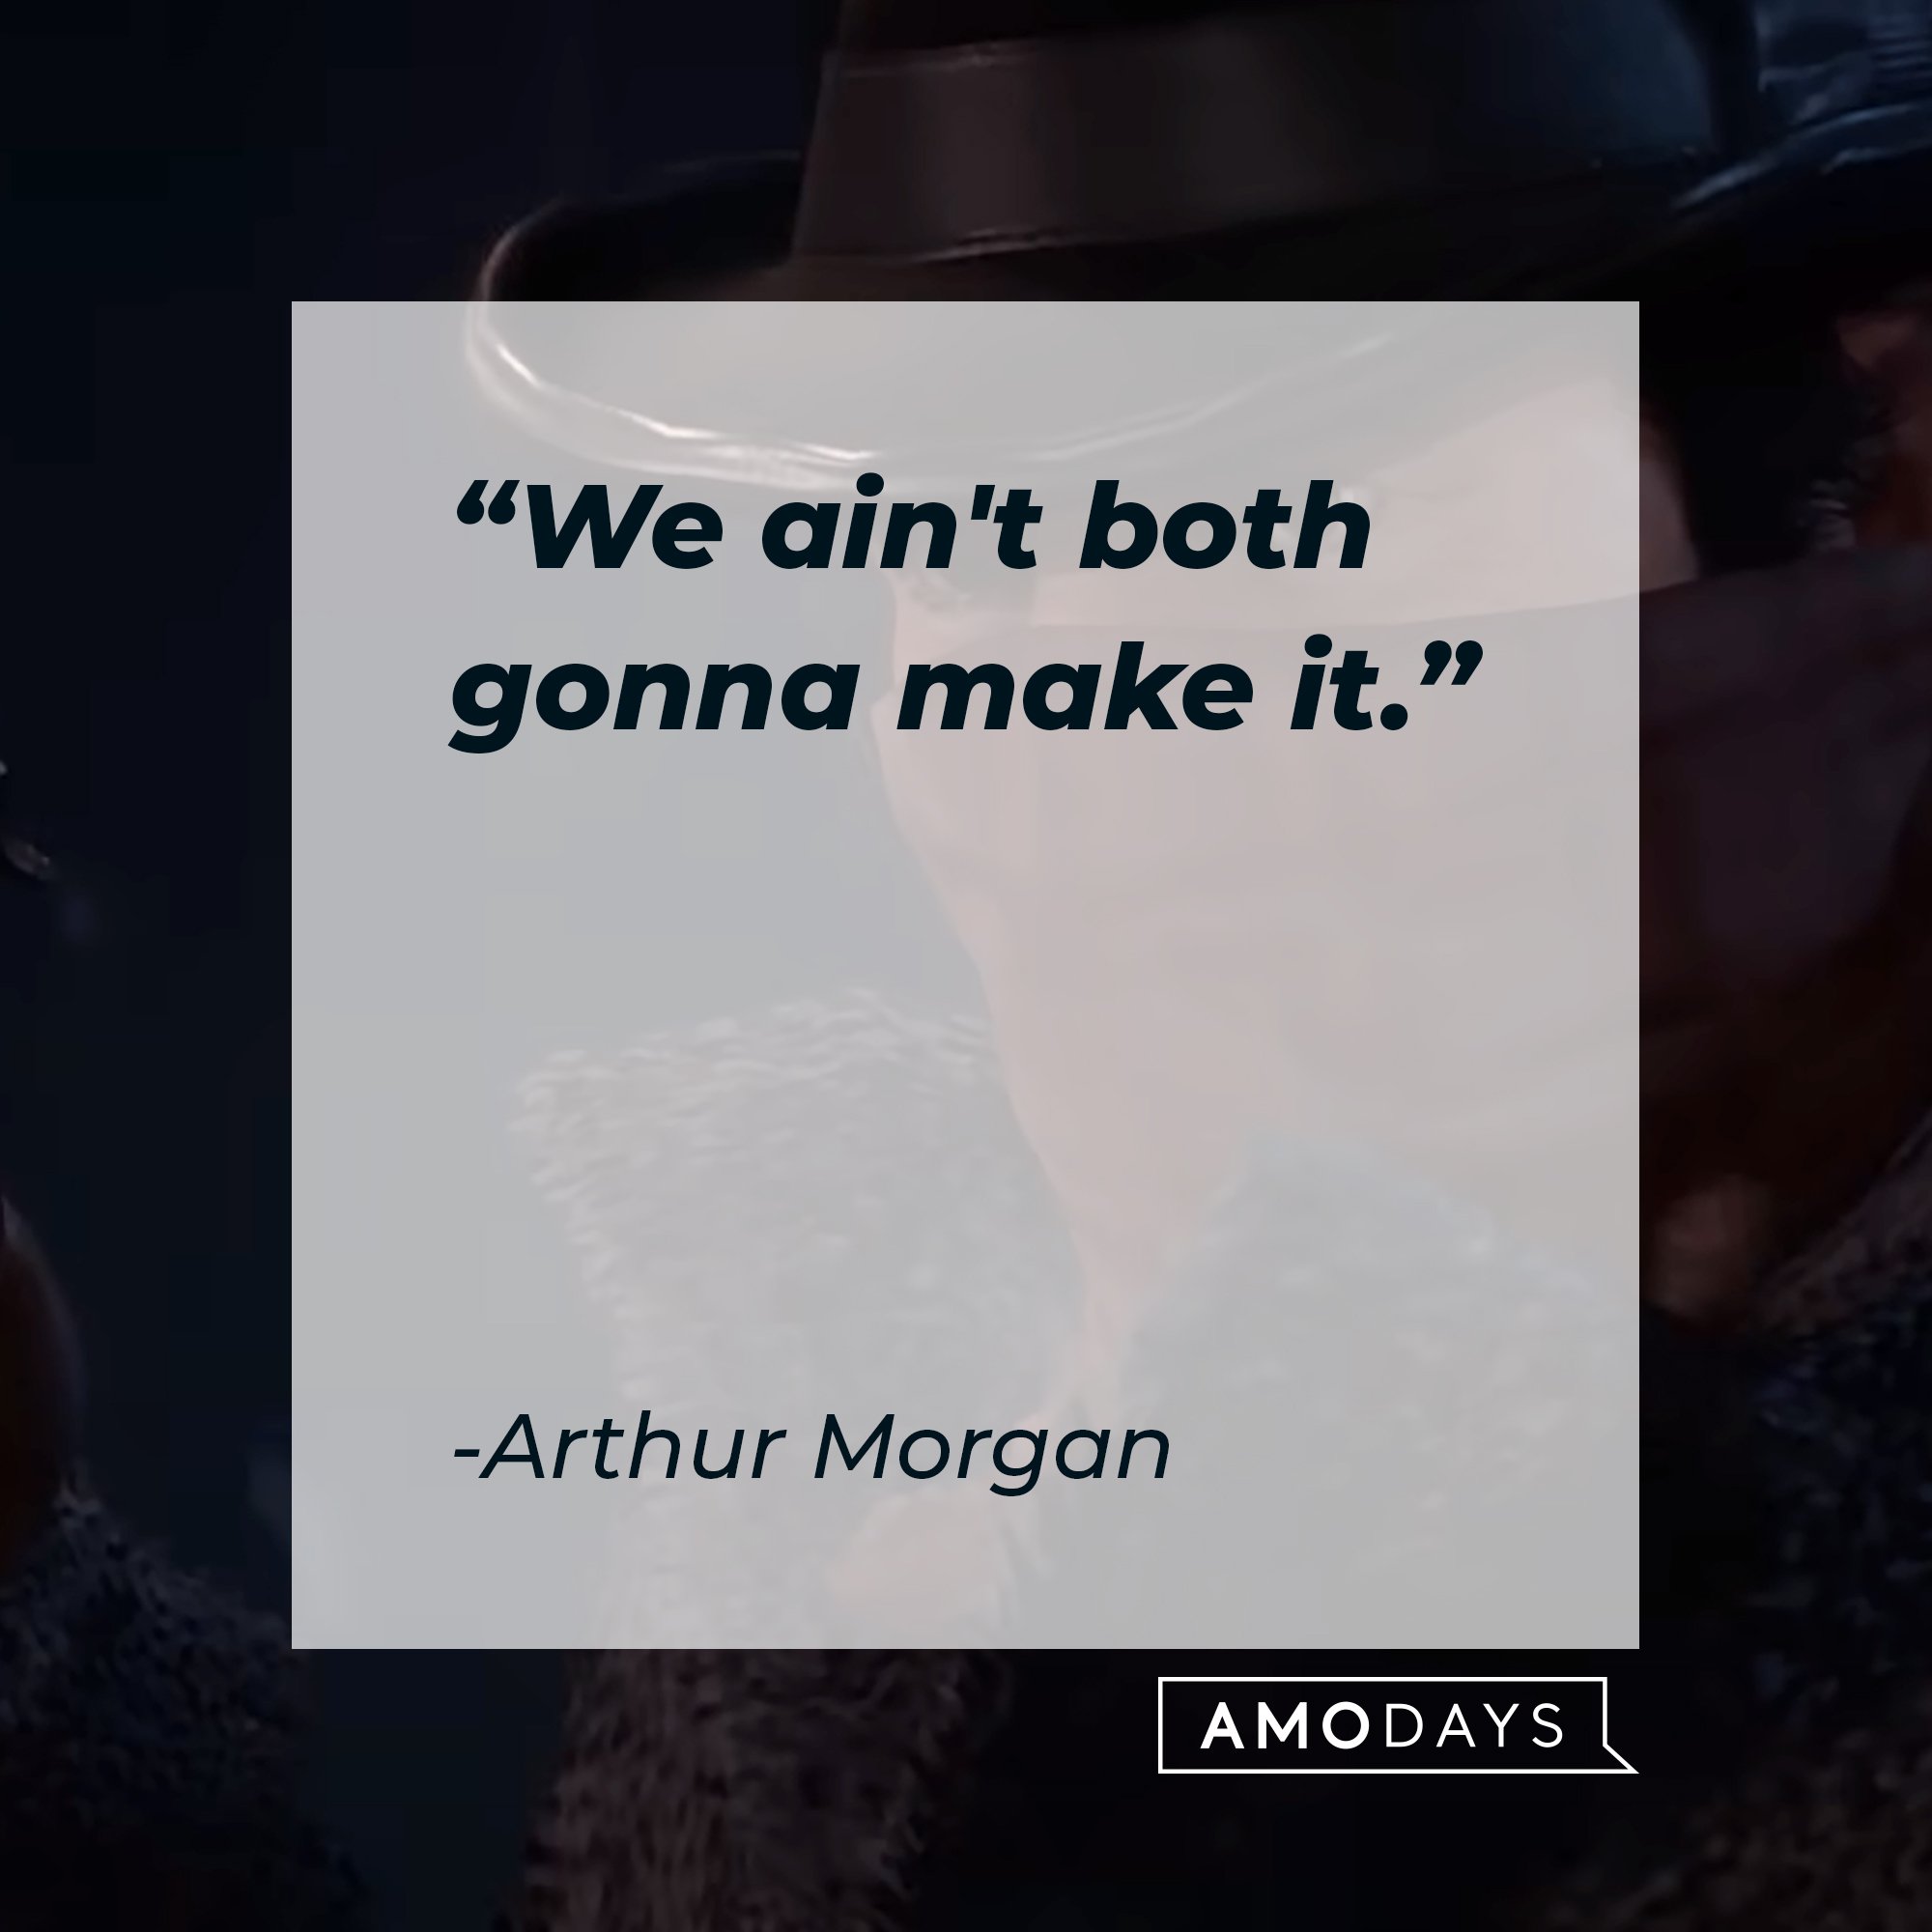 Arthur Morgan's quote: "We ain't both gonna make it." | Image: AmoDays